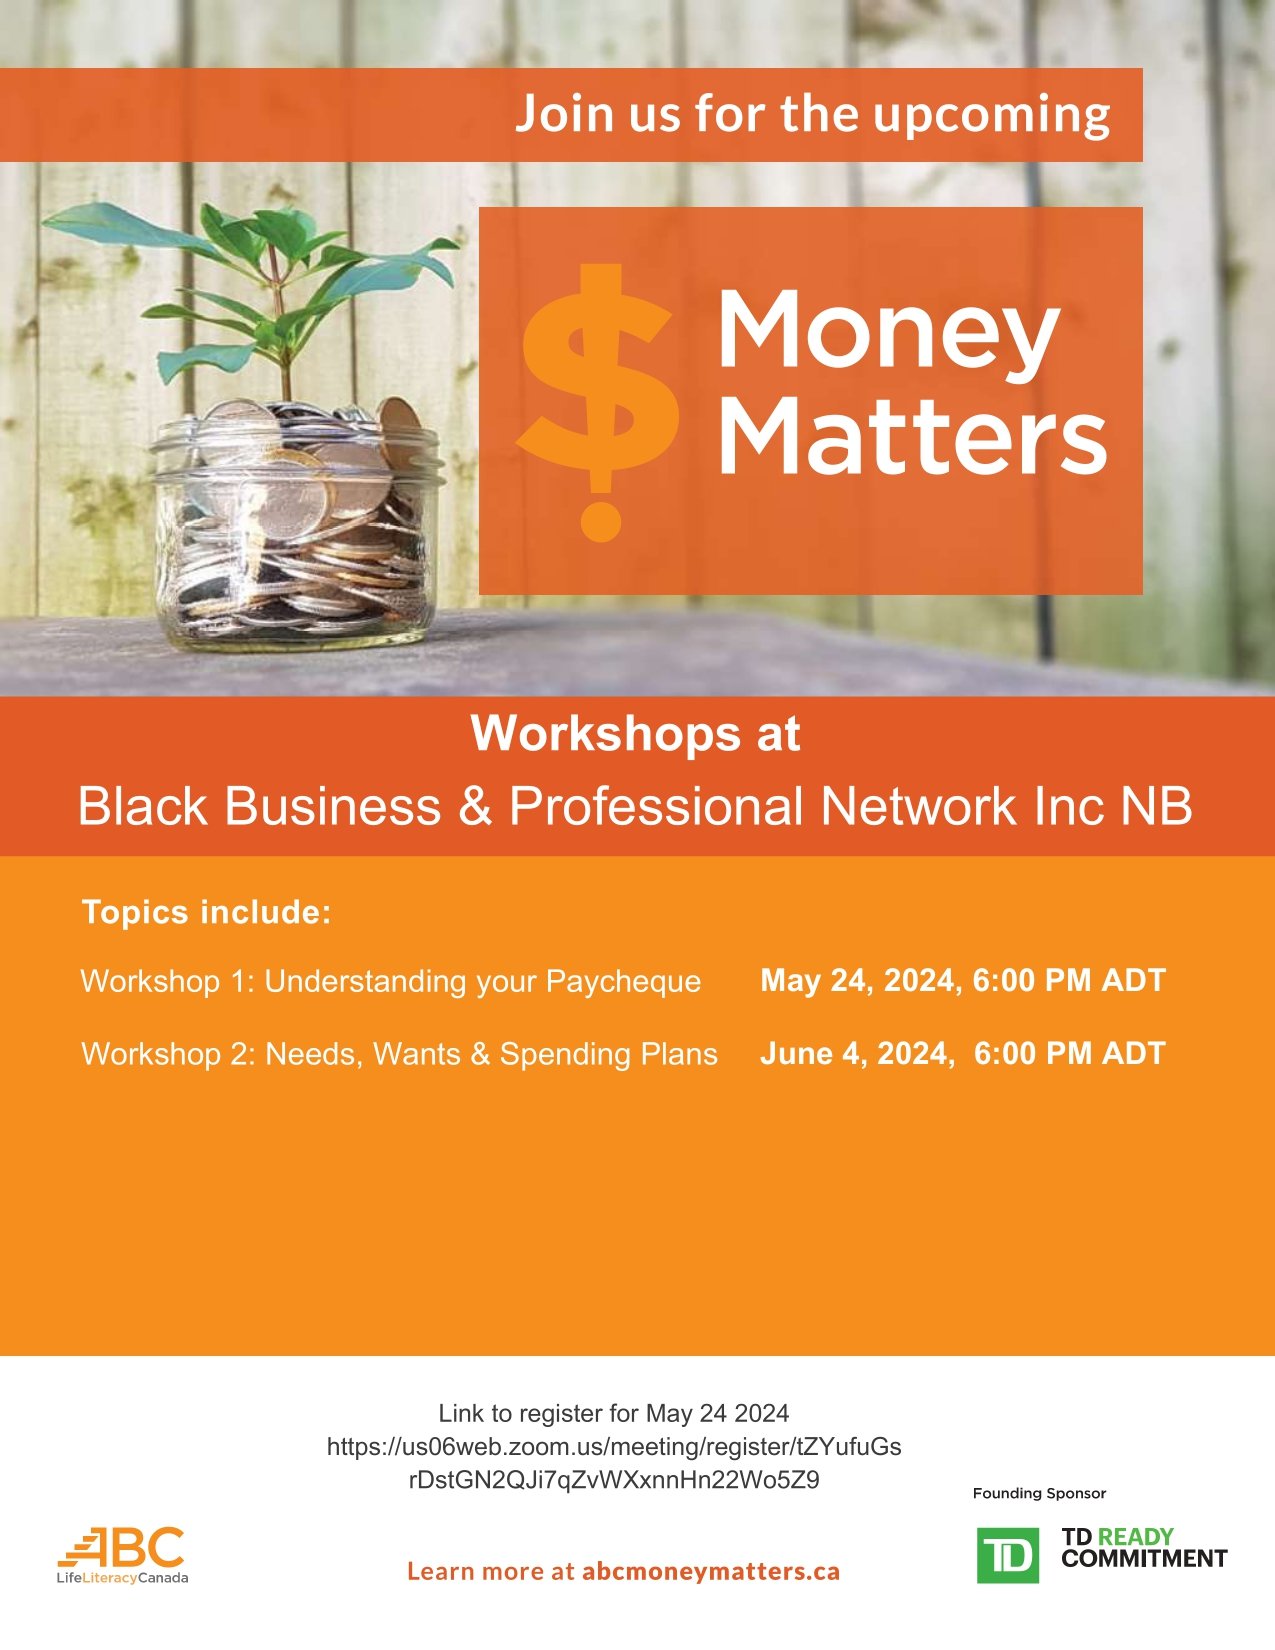 Financial Empowerment Workshop Series: "Money Matters"